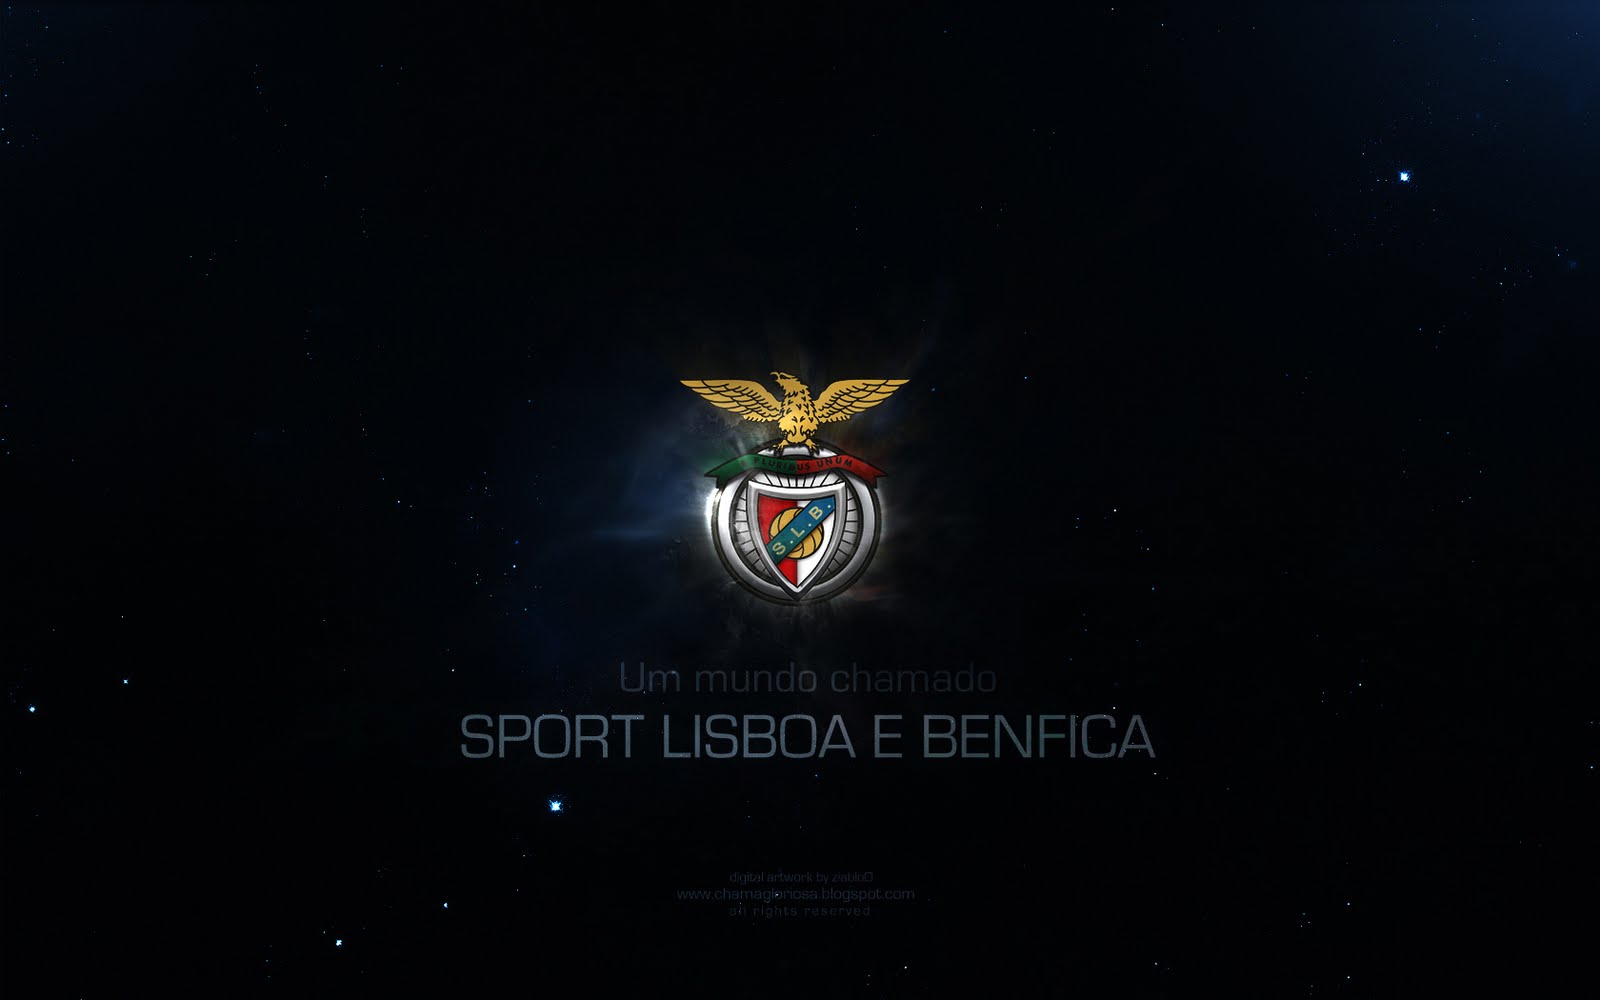 Wallpaper Um Mundo Chamado Sport Lisboa E Benfica Chama Gloriosa